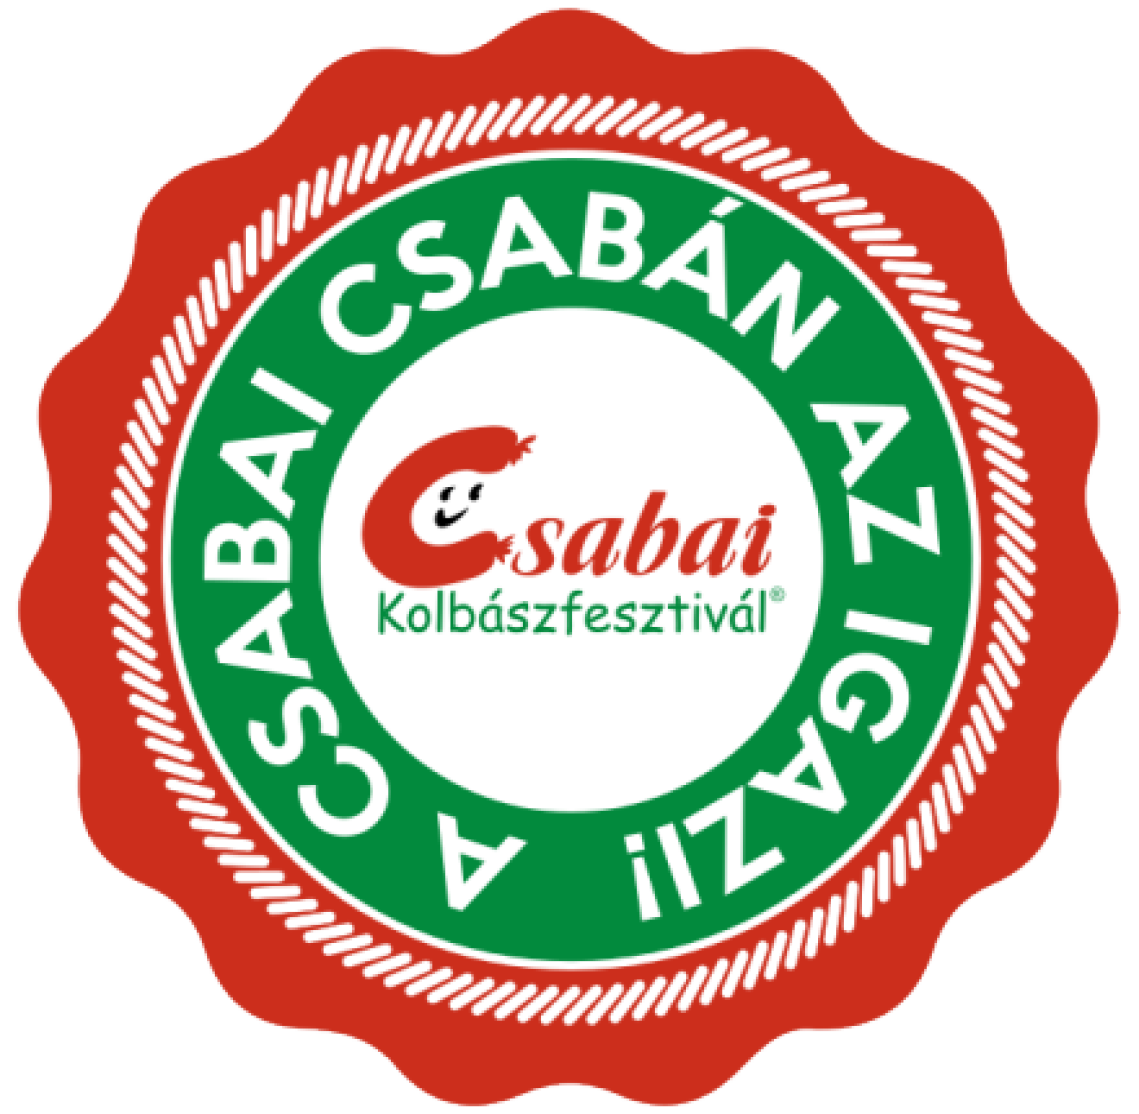 cabai-kolbaszfesztival-logo-01.png